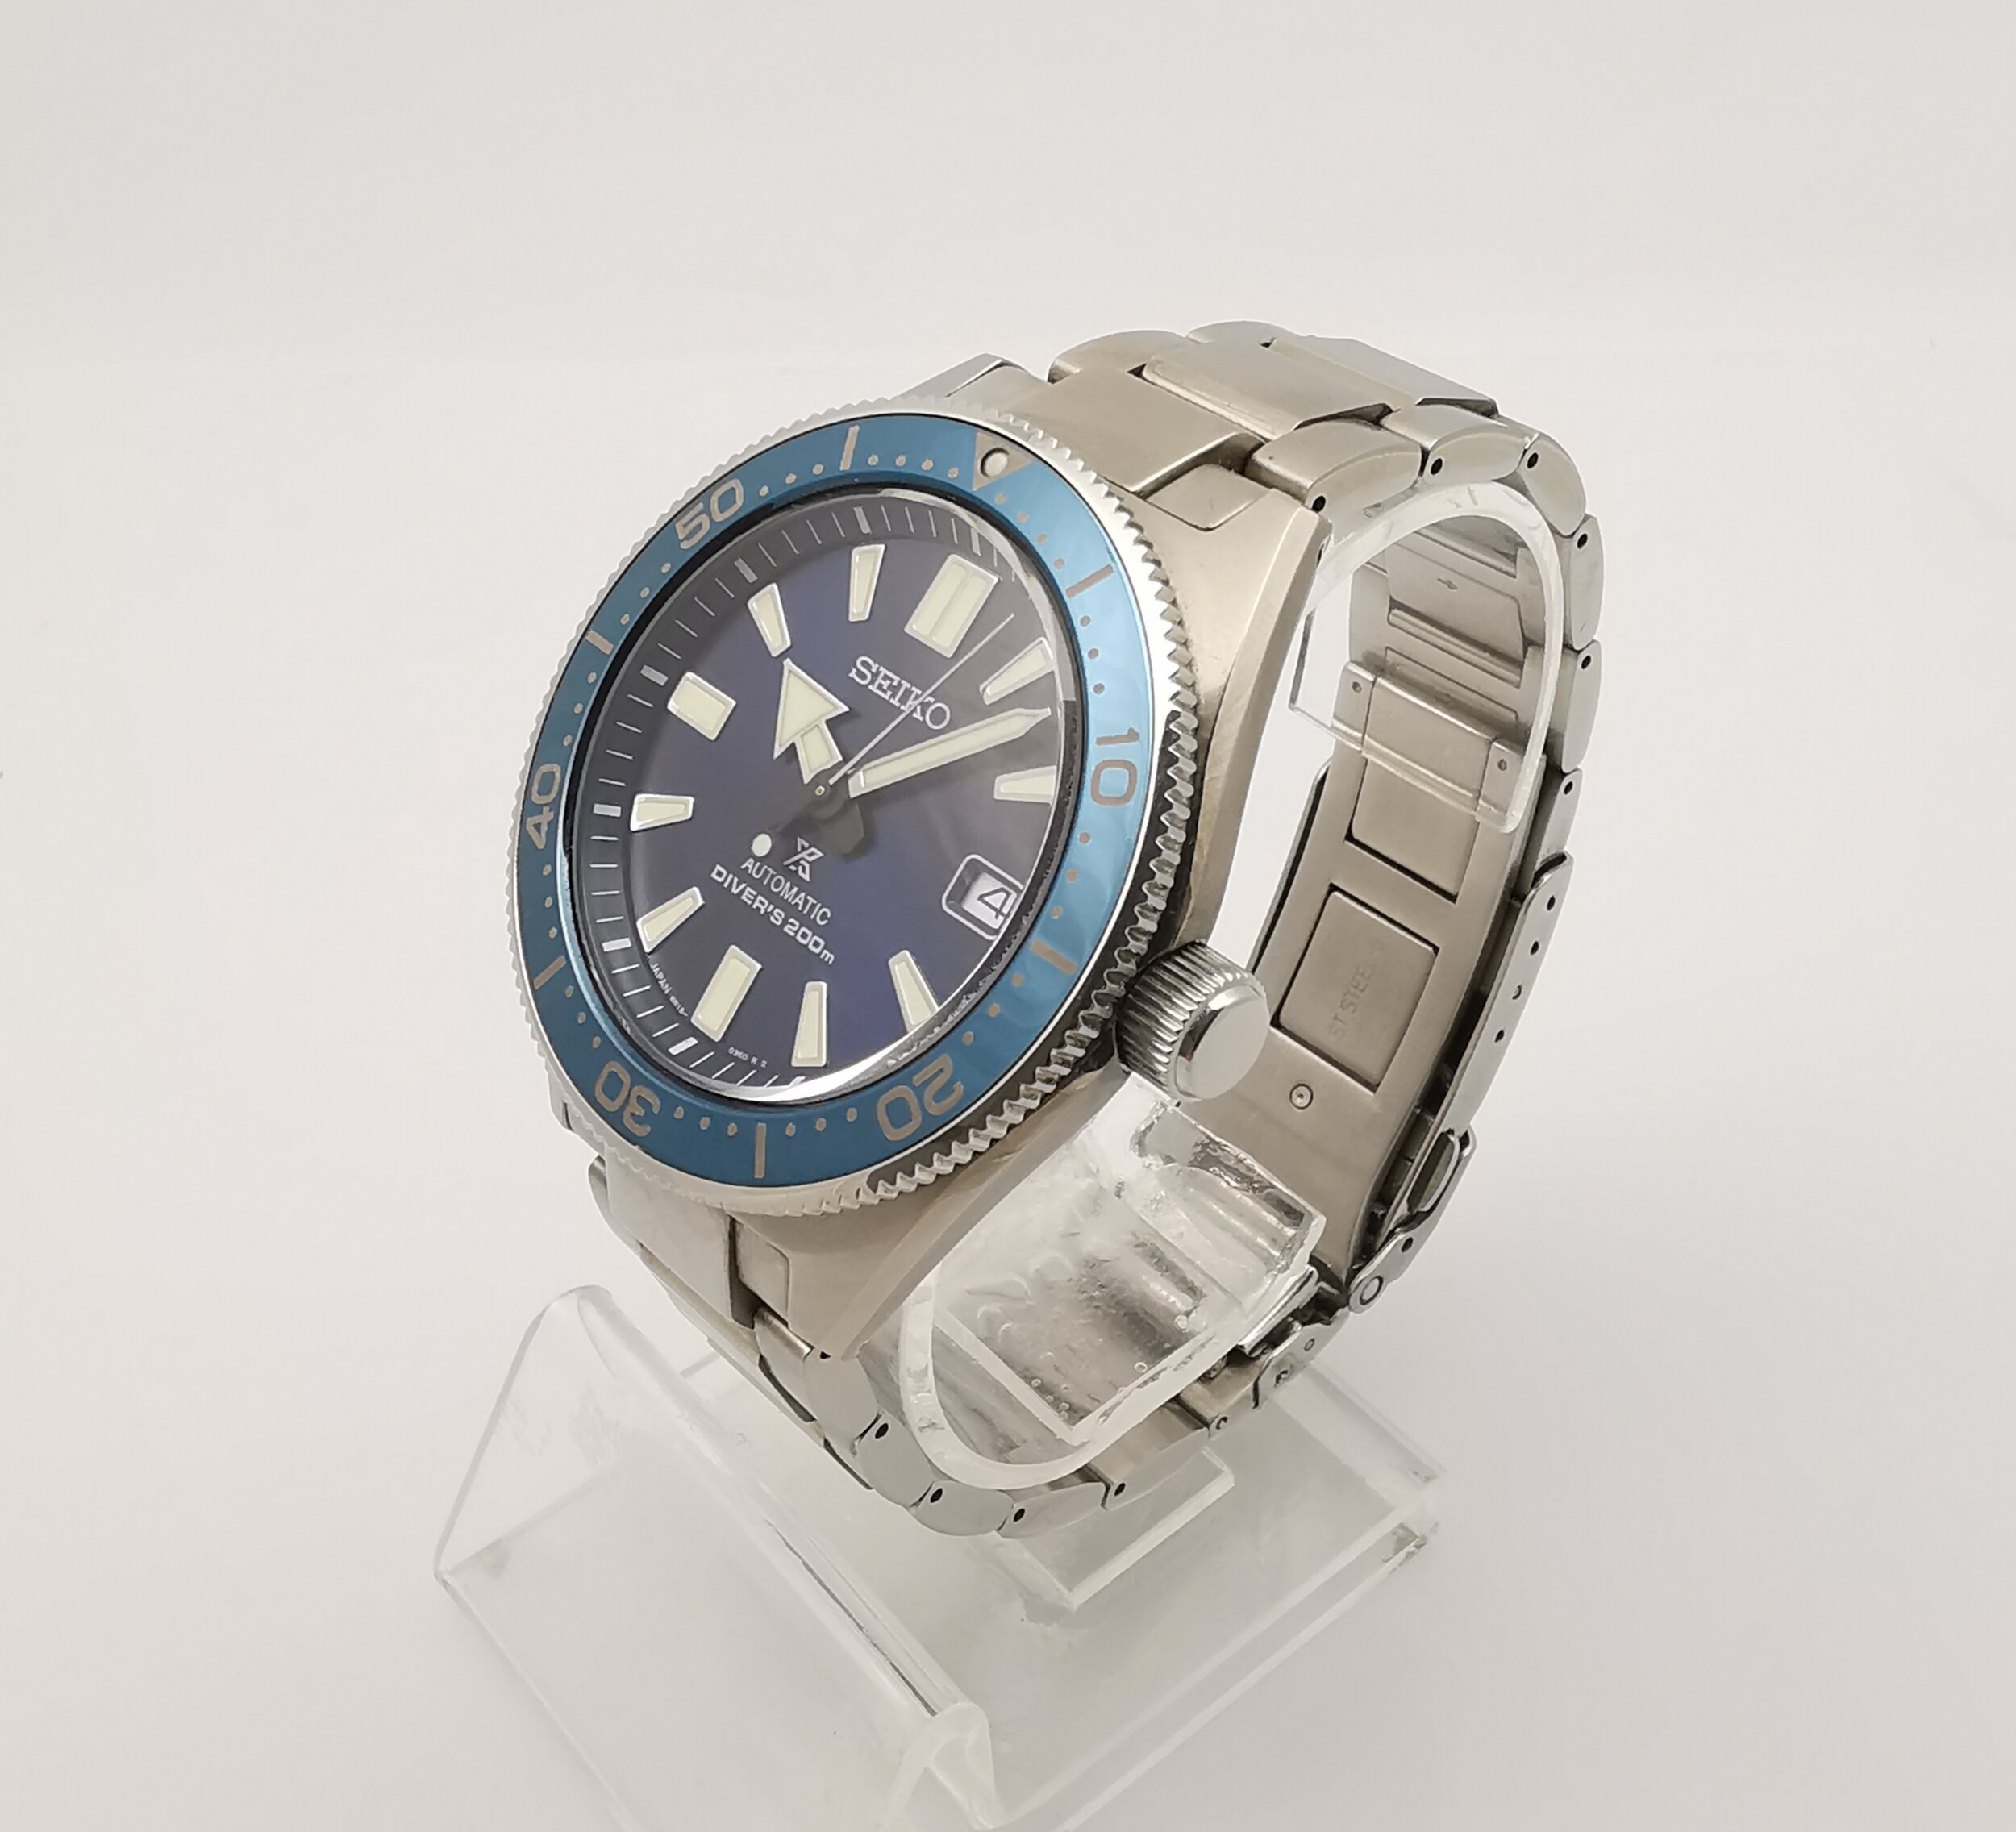 Seiko Prospex SBDC051 | Seiko watches, Rolex watches, Watches